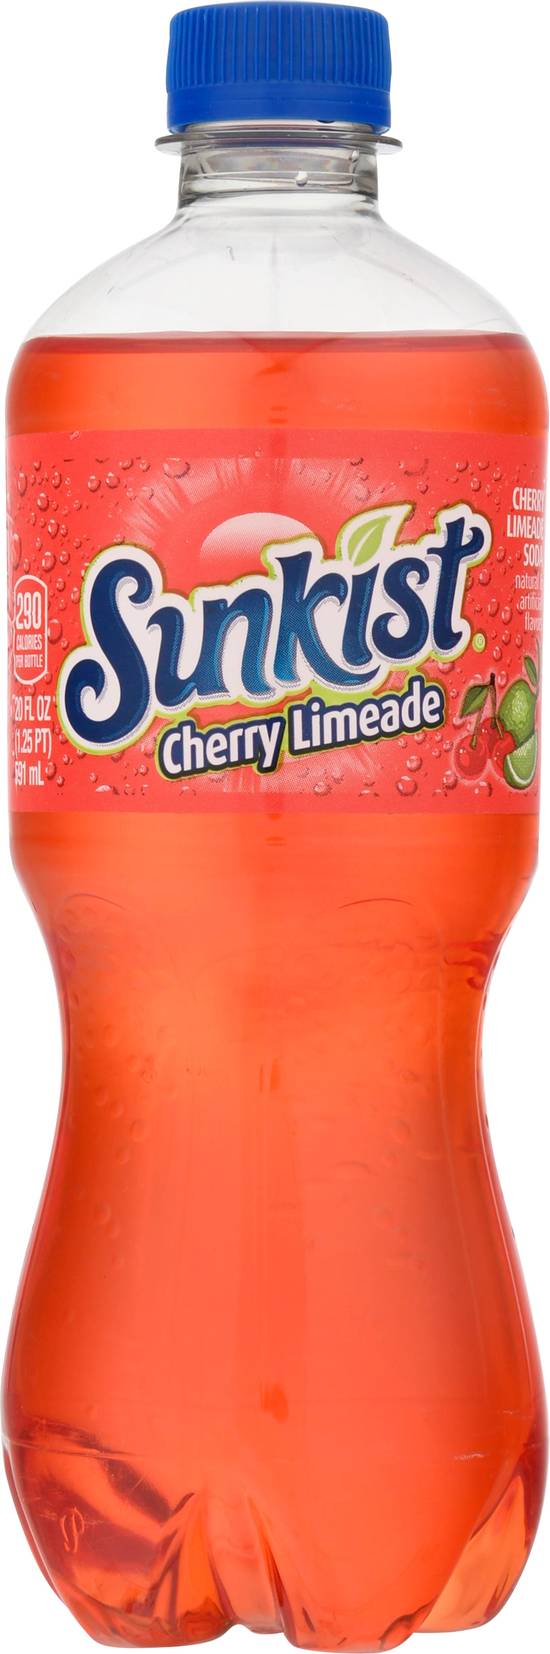 Sunkist Cherry Limeade Soda (20 fl oz)